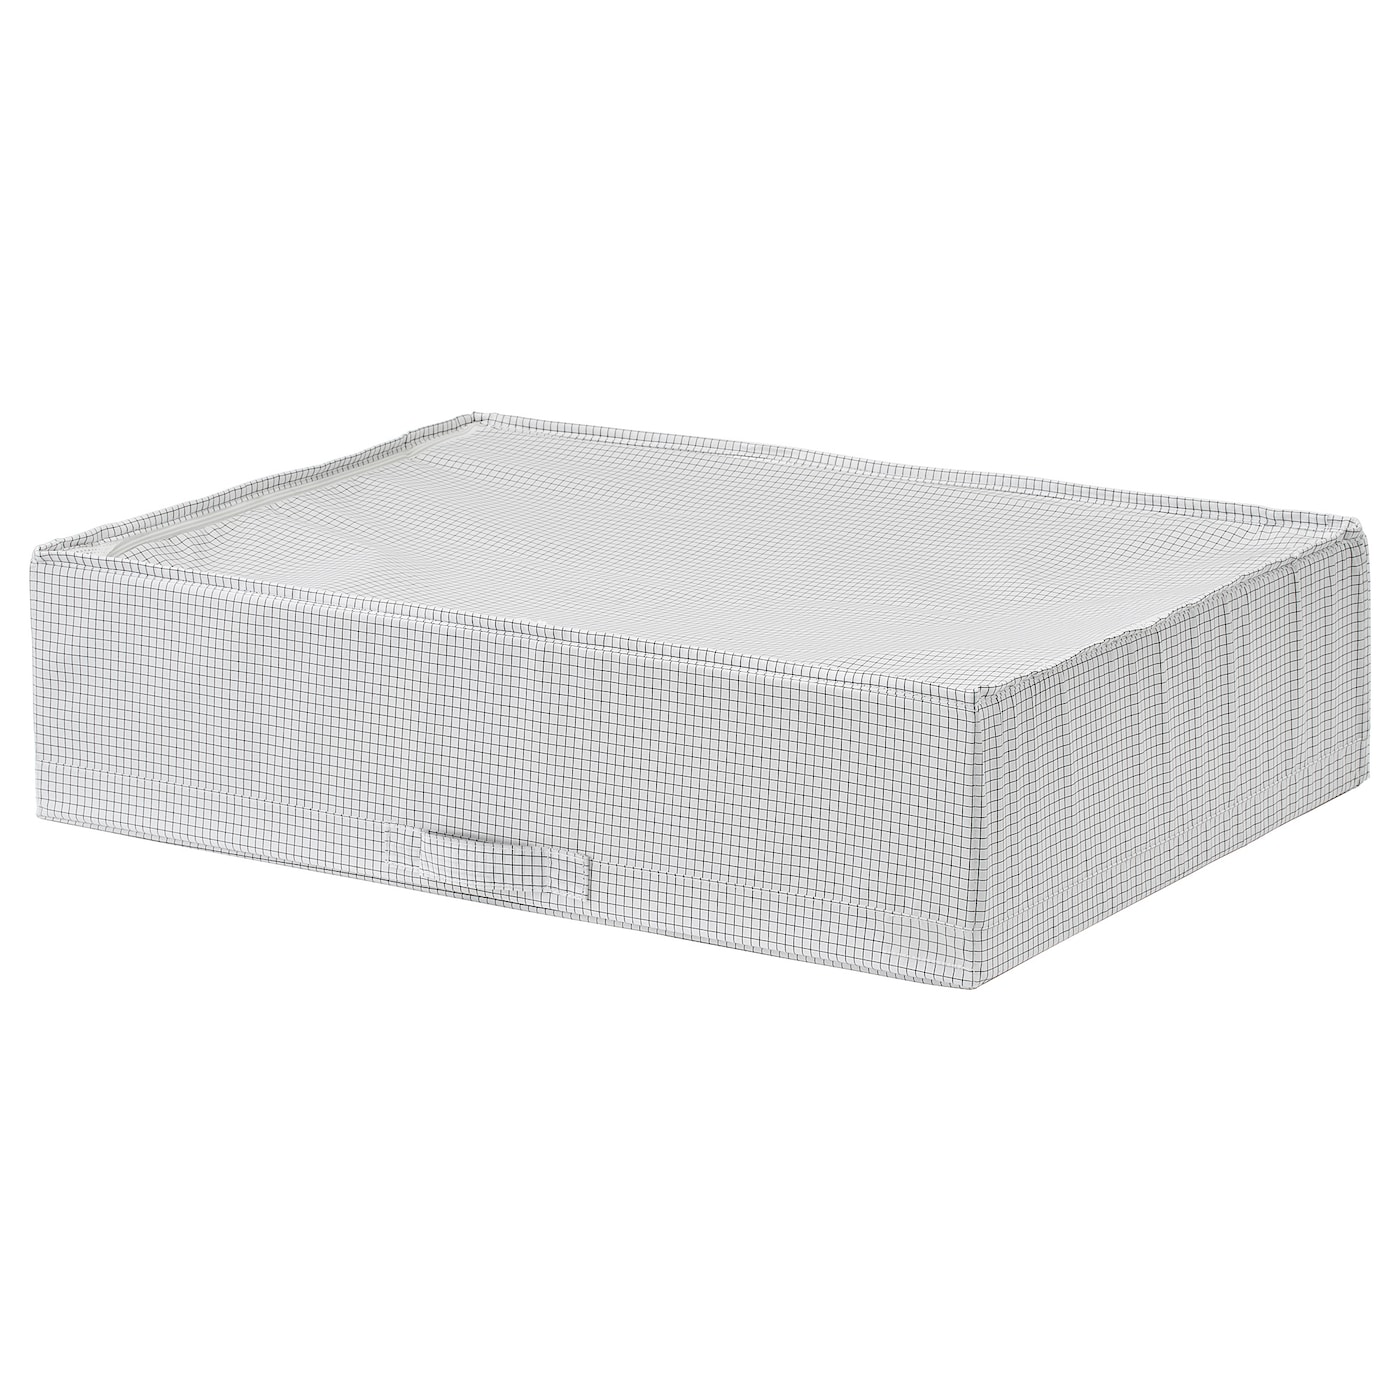 STUK СТУК Сумка для хранения, белый/серый, 71x51x18 см IKEA stuk стук органайзер белый 26x20x6 см ikea